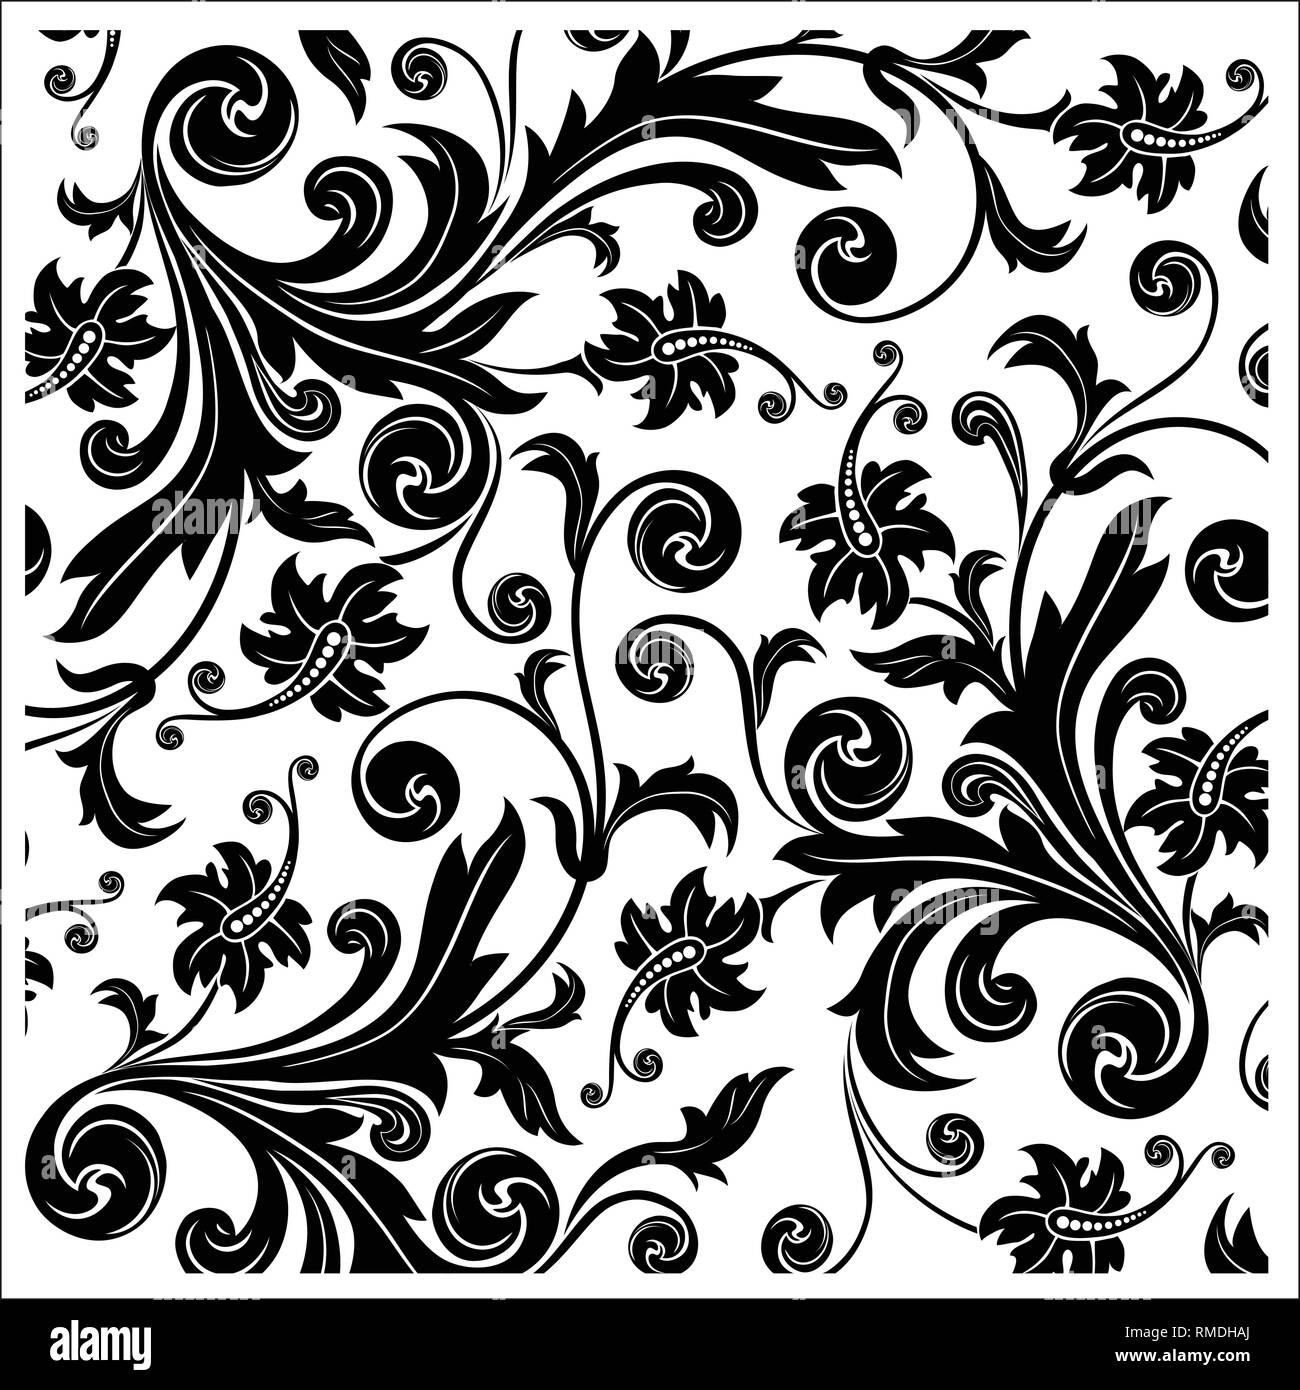 Batik design Black and White Stock Photos & Images - Alamy